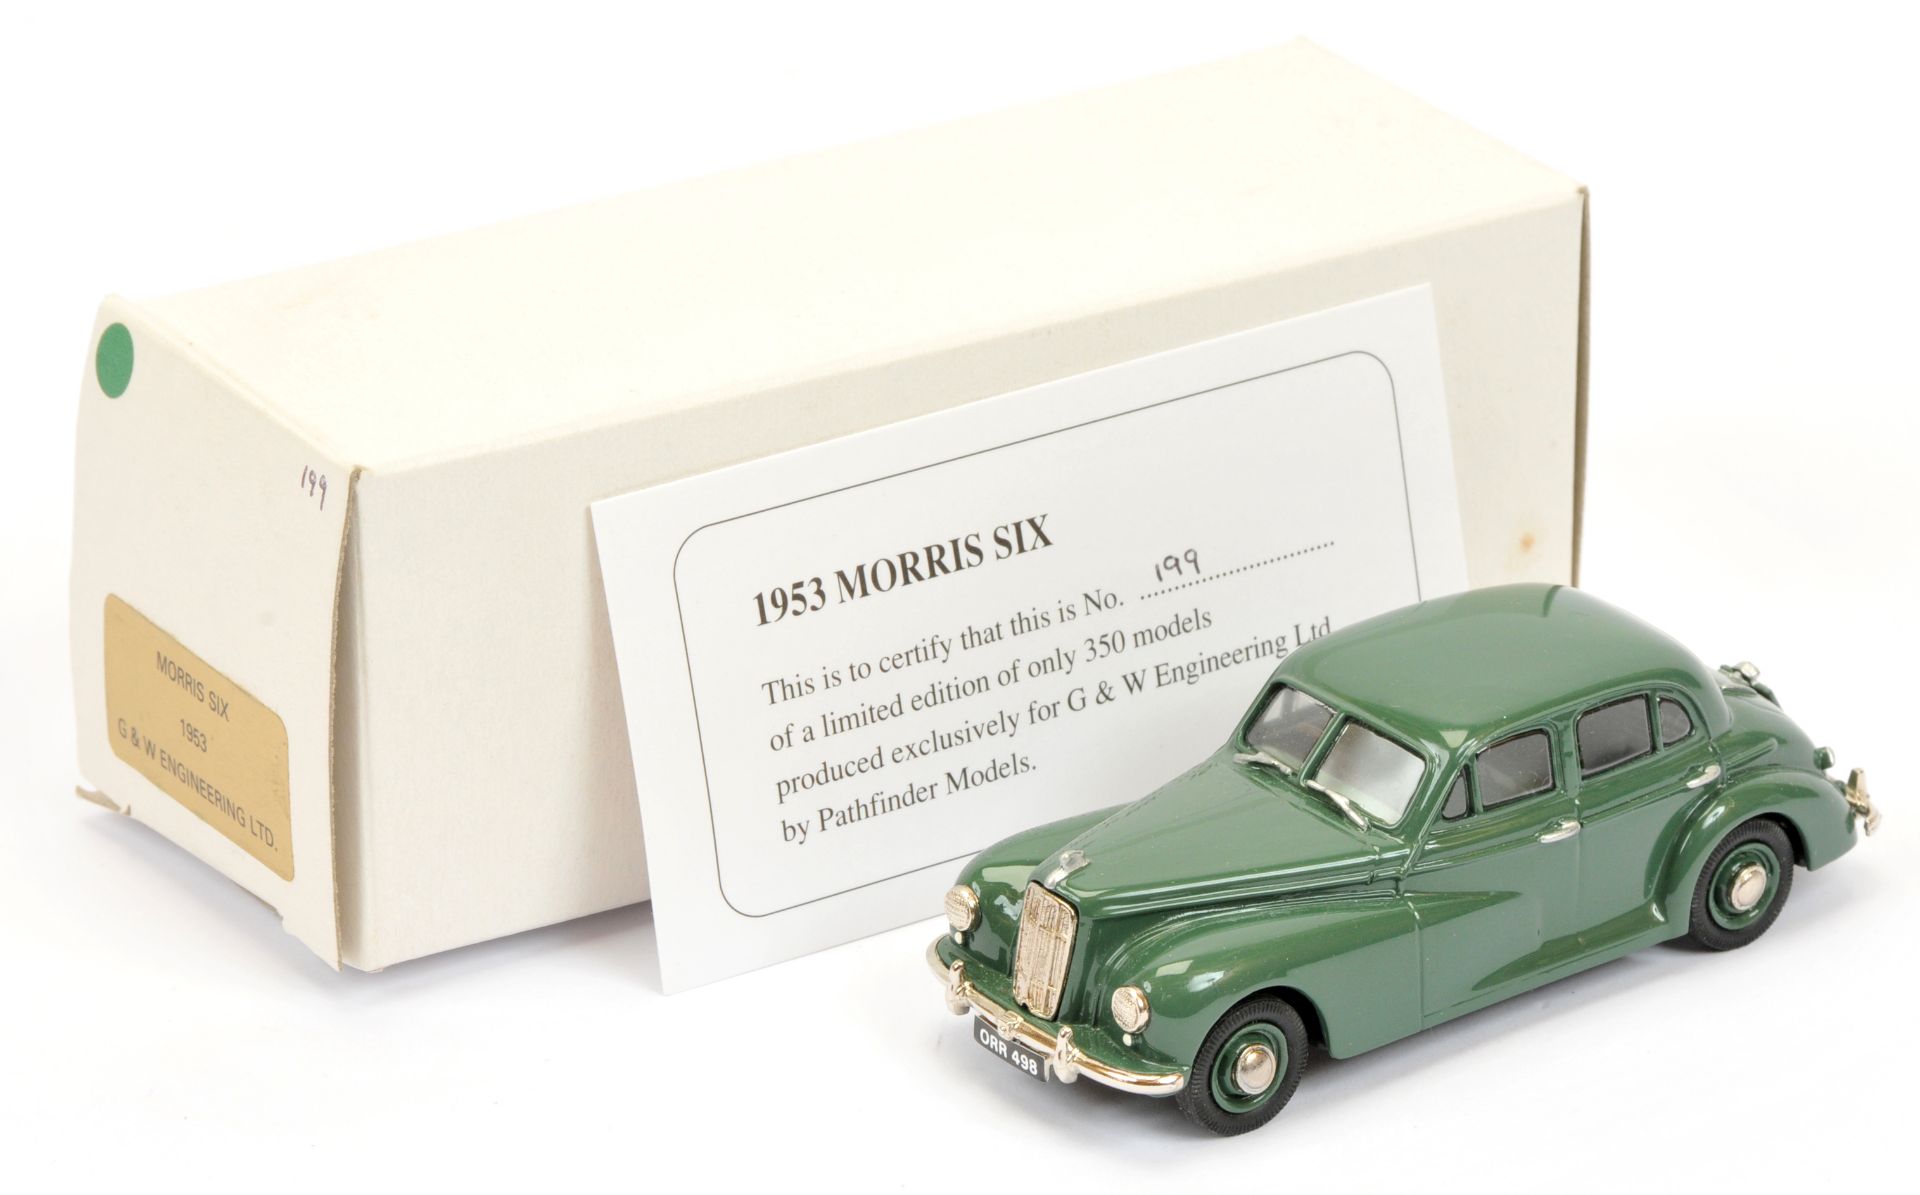 Pathfinder Models (G & W Engineering Ltd) Morris Six 1953 -